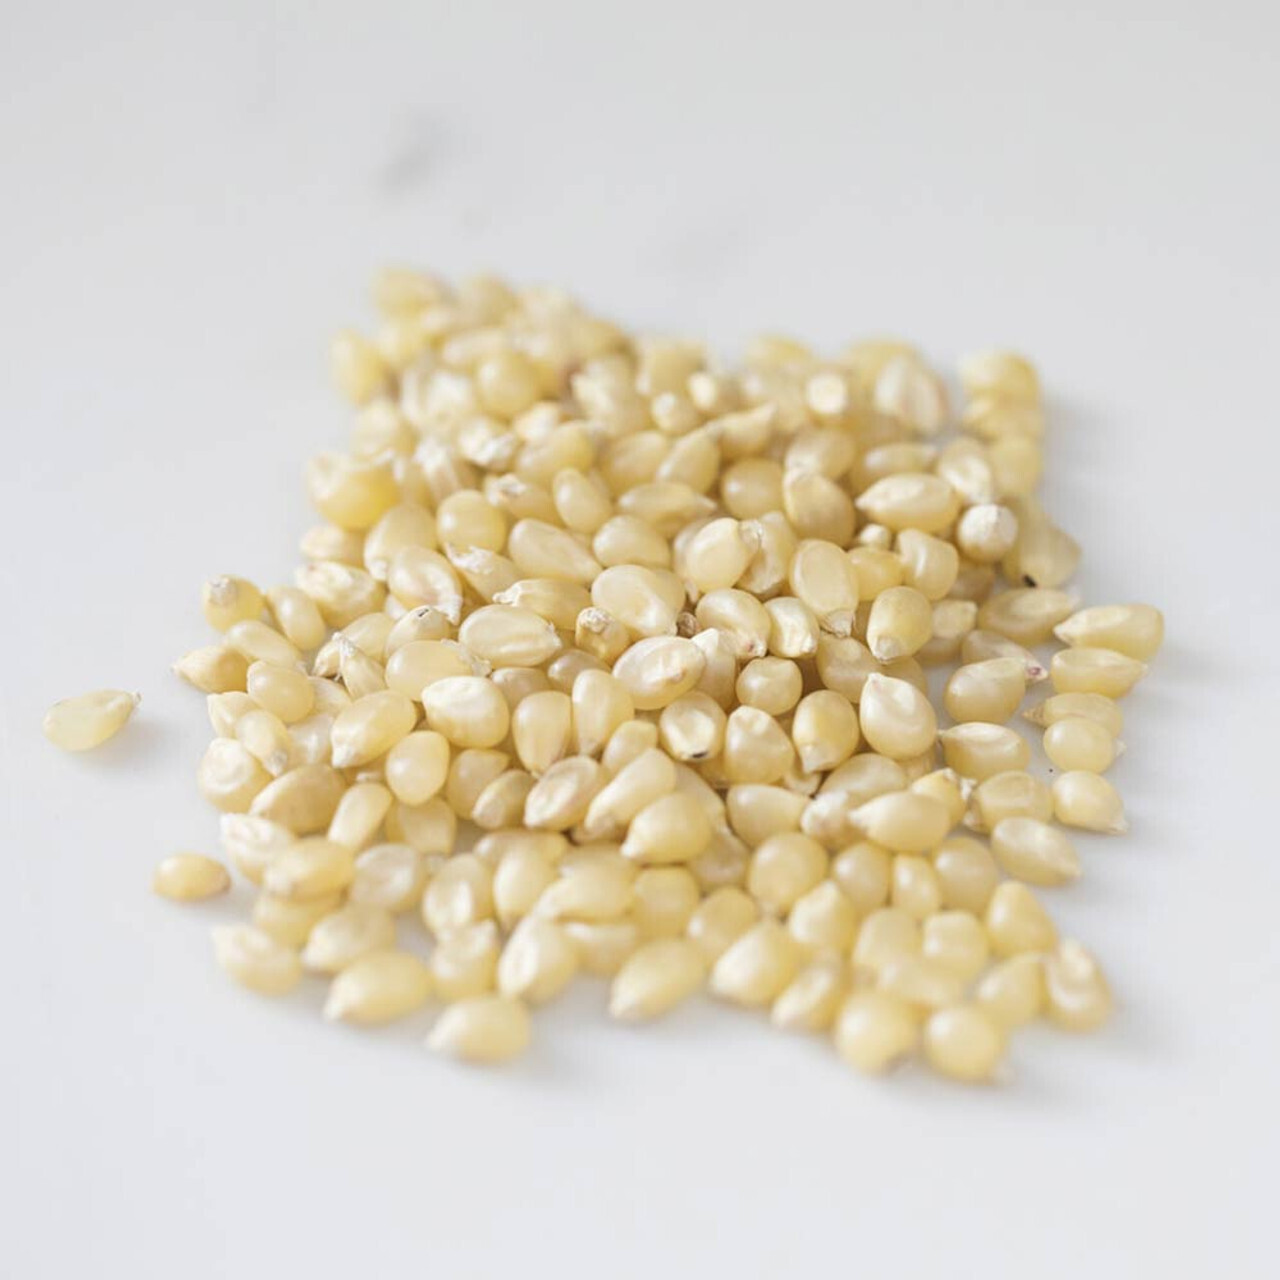 347 Popcorn White Organic - 1 lb. (CC1)